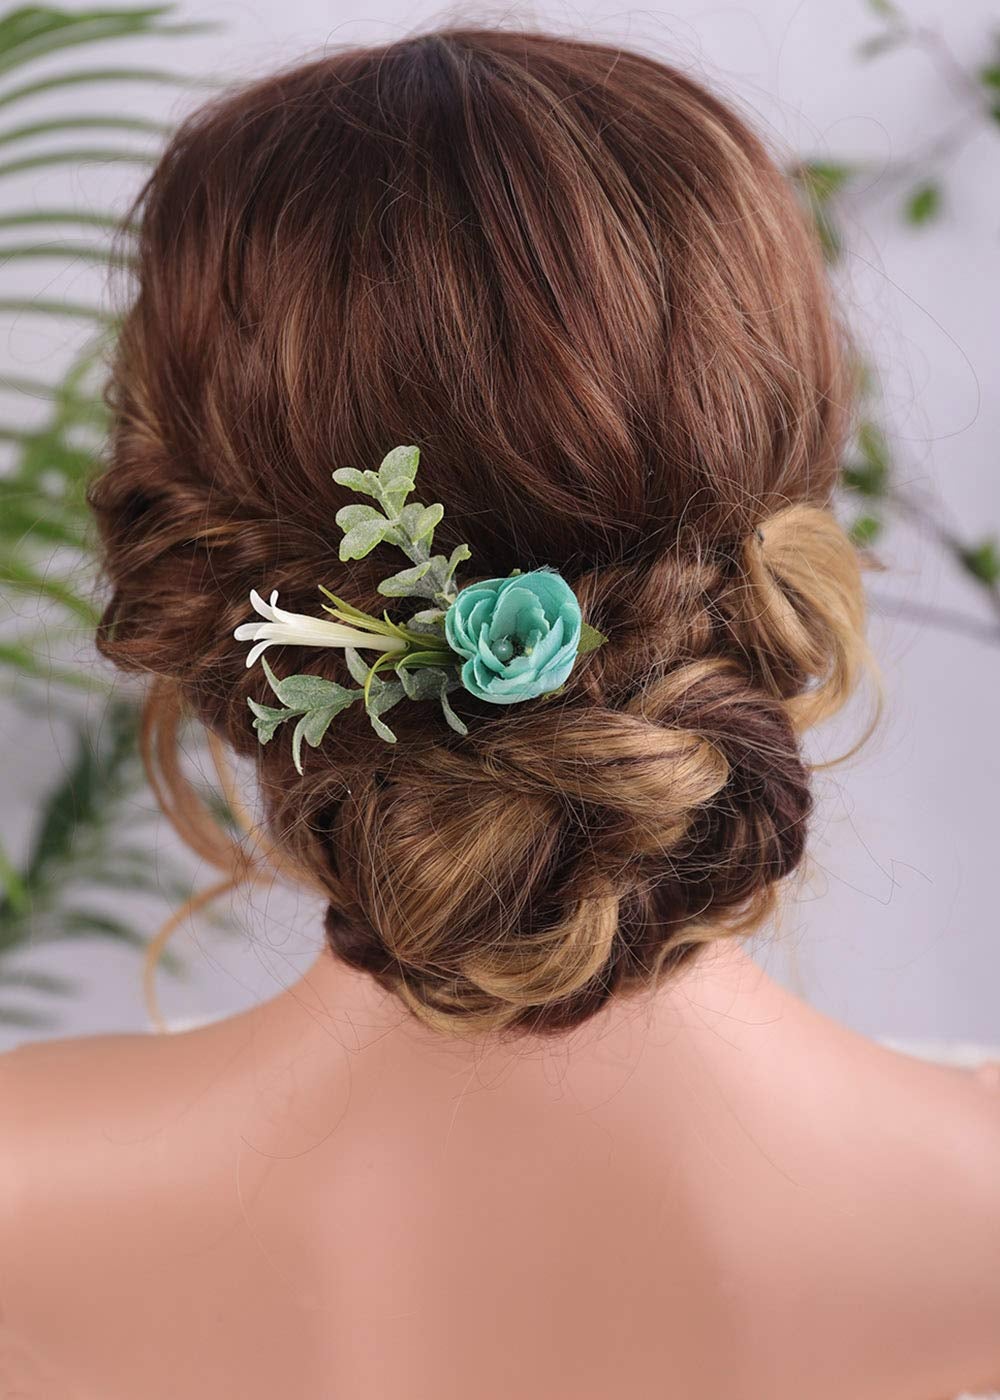 hair clip made to look like eucalyptus, honeysuckle, and a blue rose 